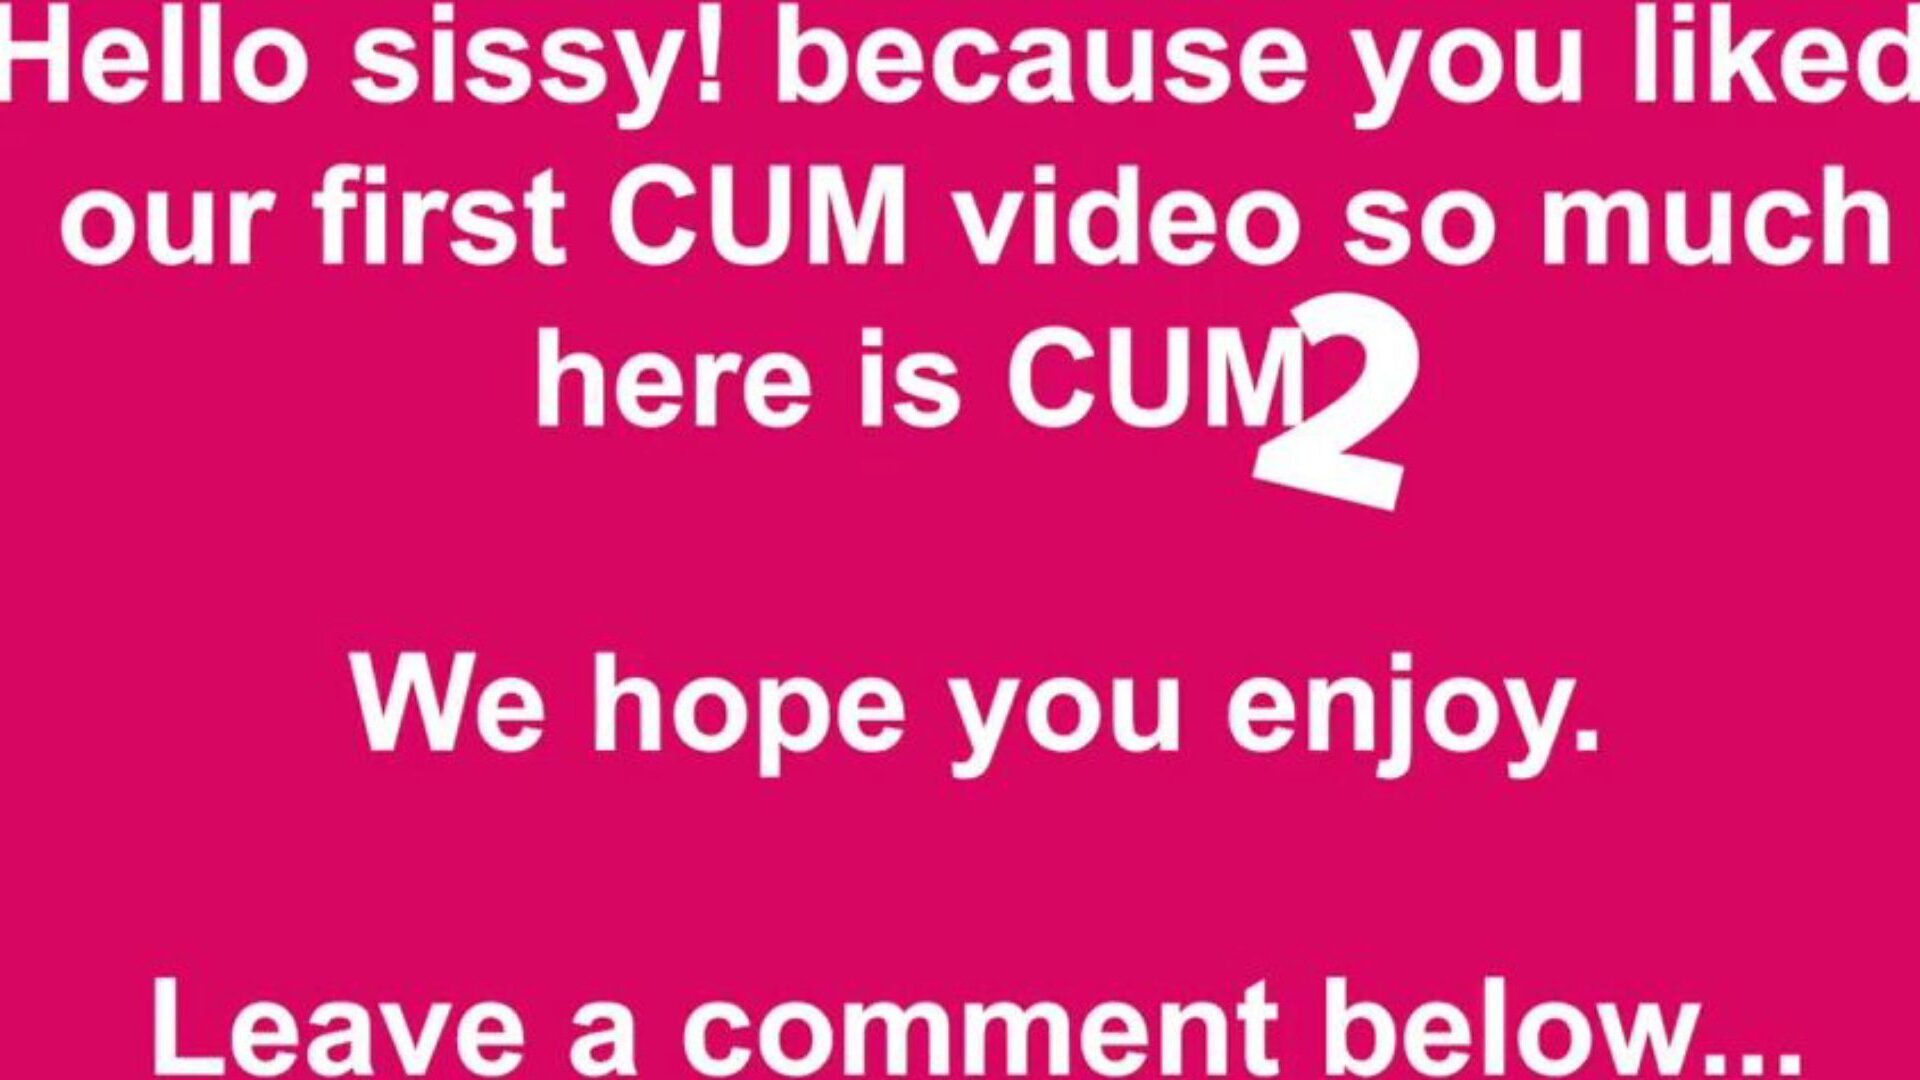 cum two free cum & cumming tube porn video 49 - xhamster gledajte cum two tube fuck-a-thon video besplatno na xhamster, s ogromnom kolekcijom besplatnih cum cumming tube & tube 2 hd epizoda porno filma